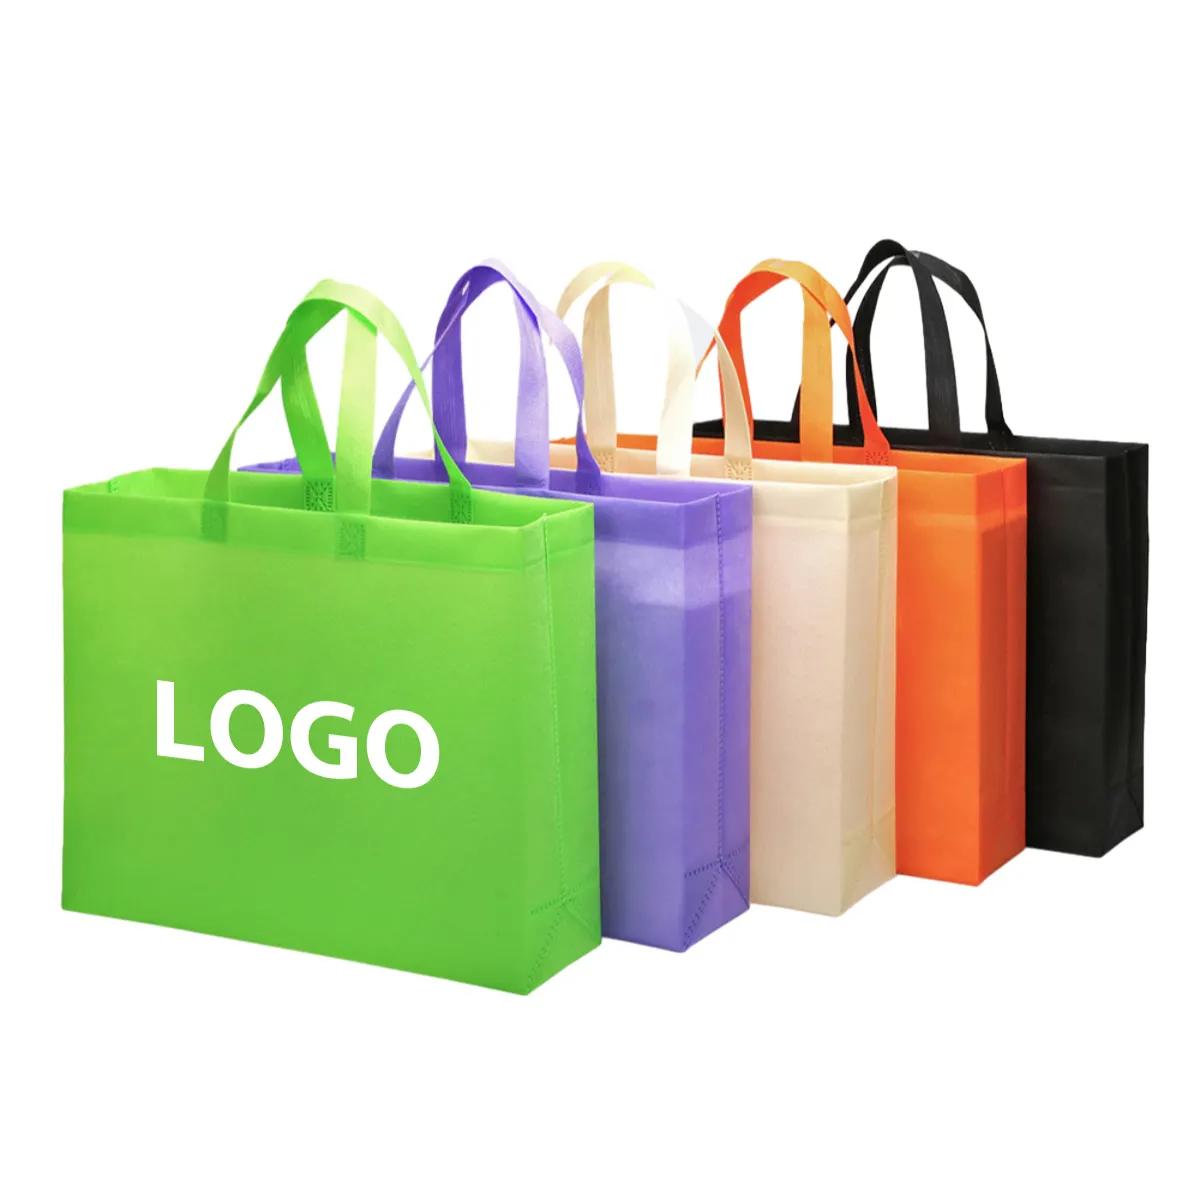 Cheap And High Quality Reusable Shopping Bag Non Woven Tote Bag Can Be Customized On Your Logo Non Woven Bag